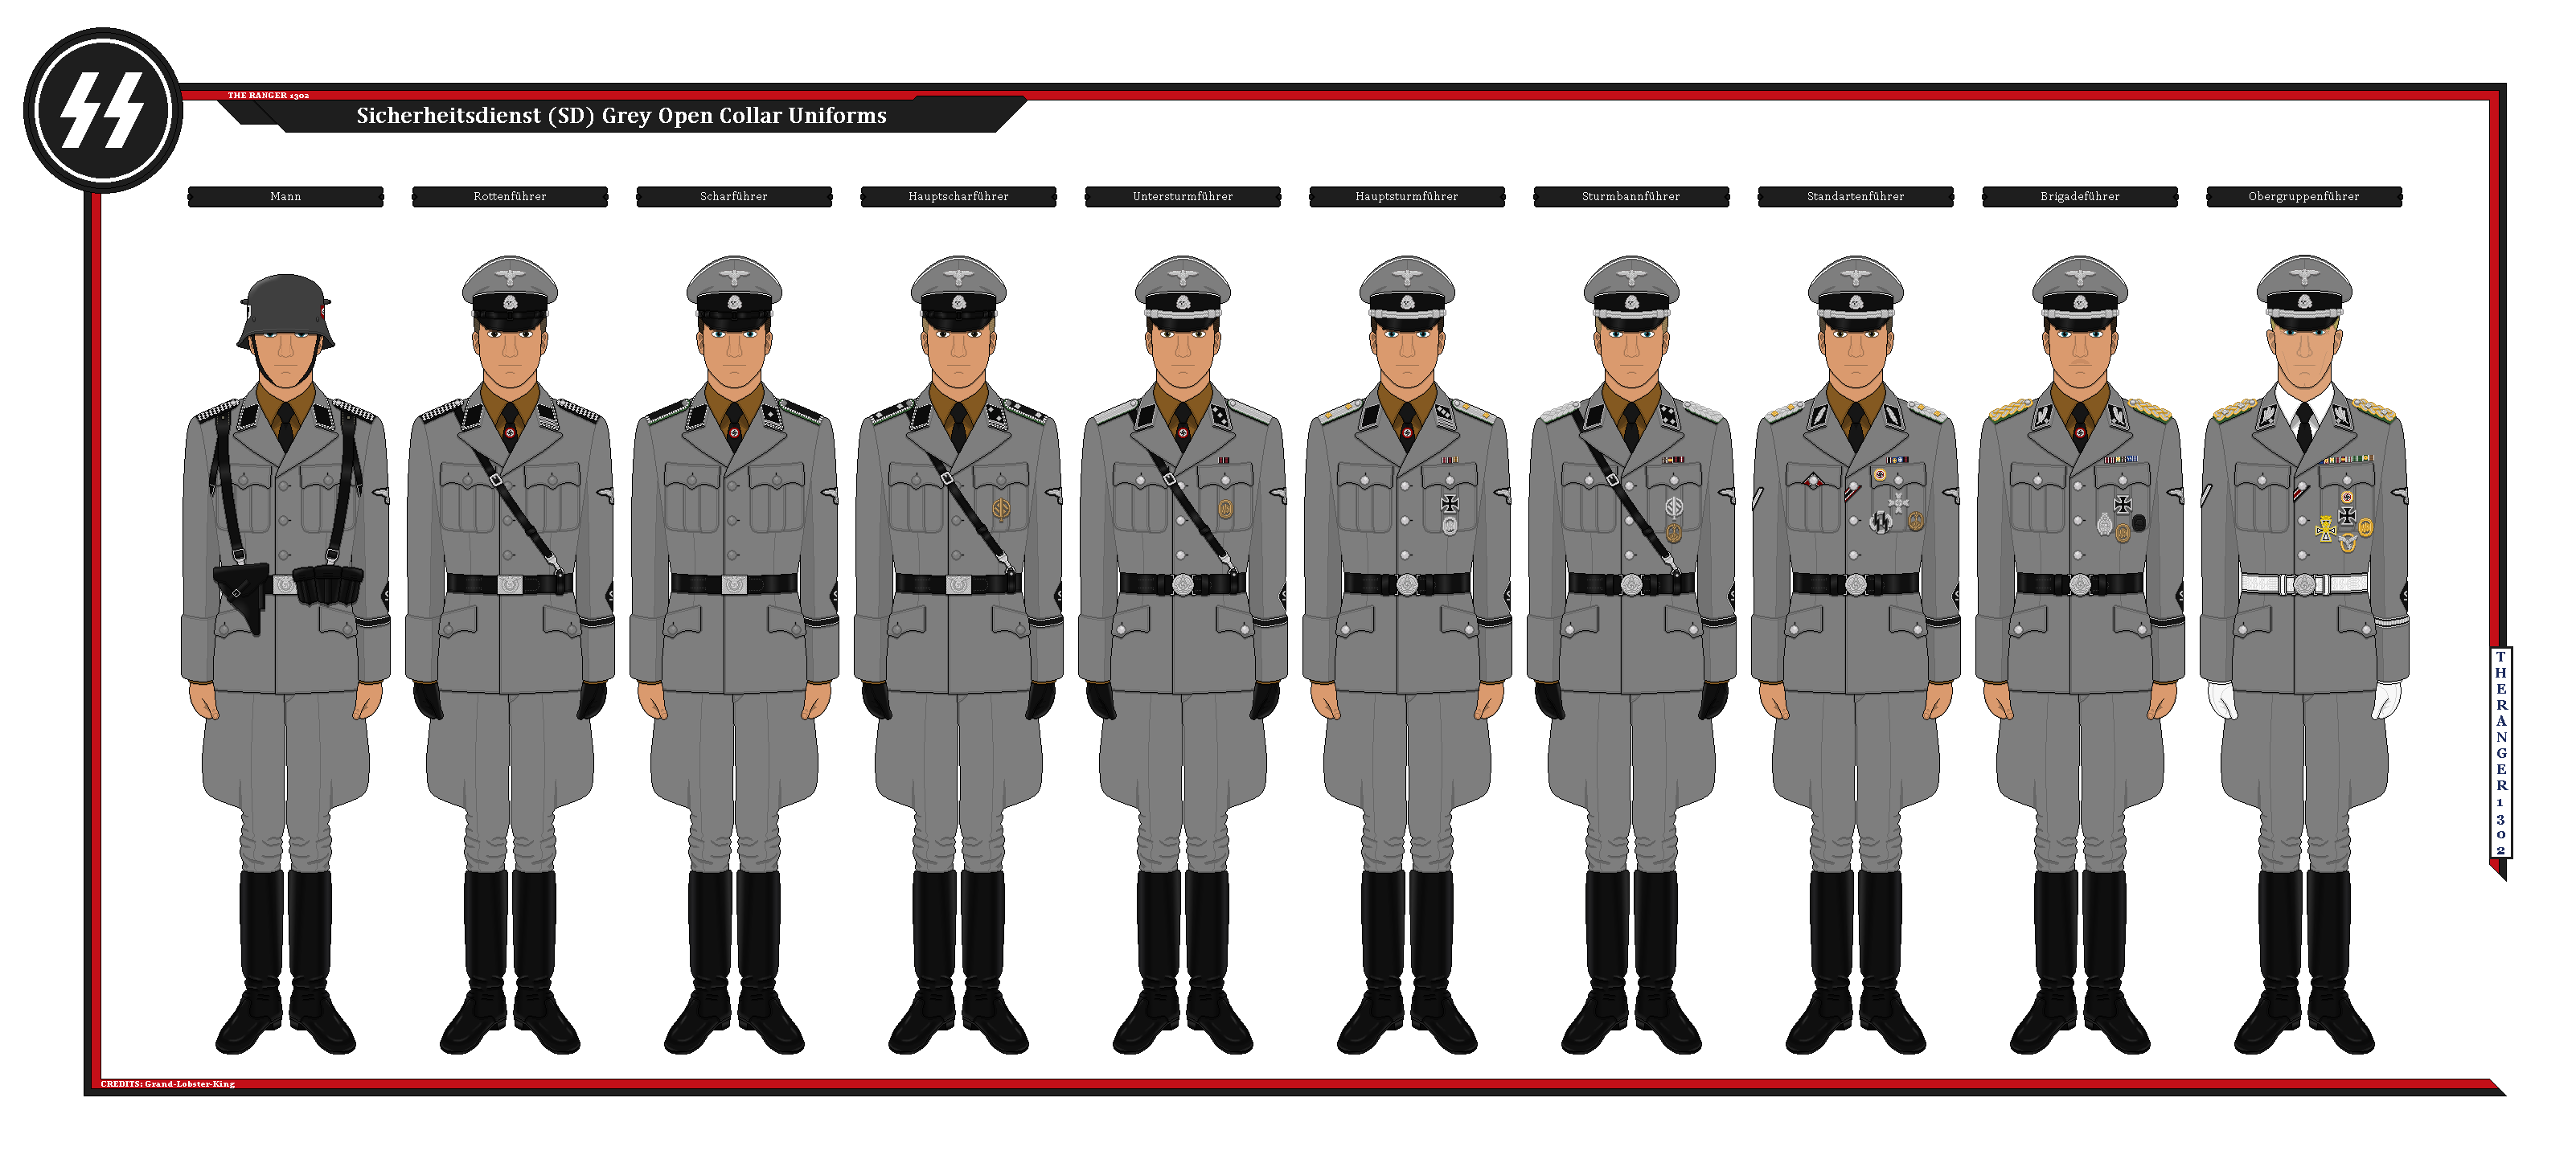 Islas del pacifico también Propuesta alternativa Sicherheitsdienst (SD) Uniforms by TheRanger1302 on DeviantArt